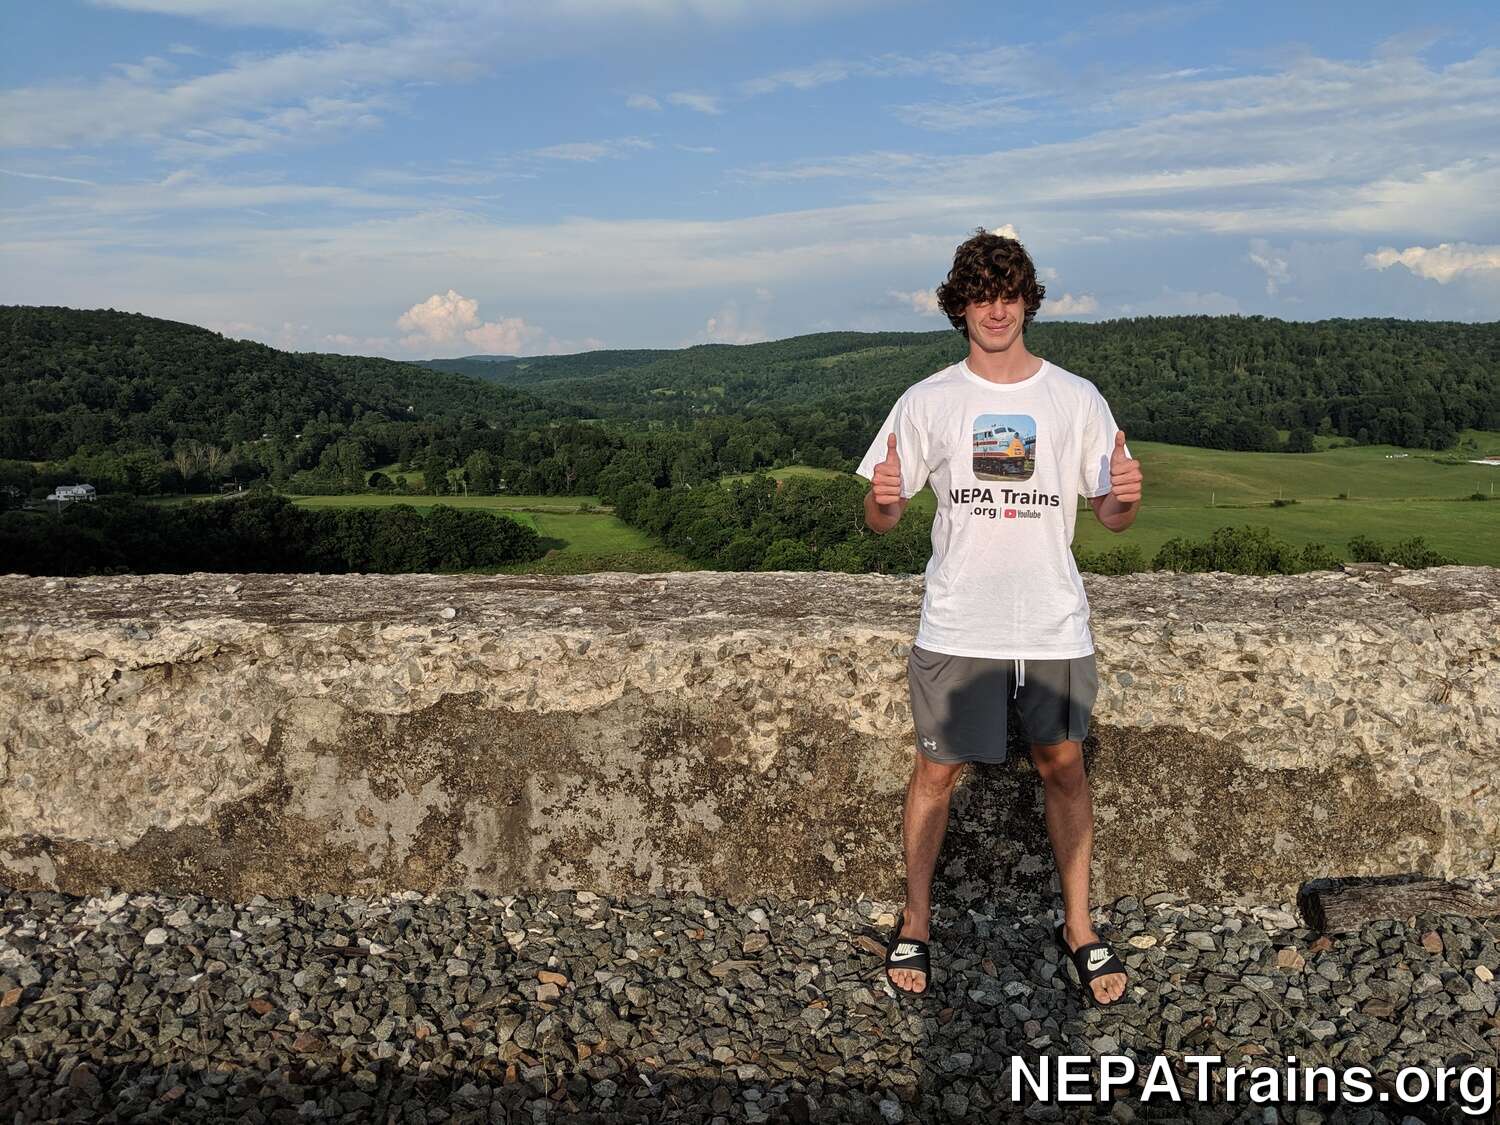 Kc in a NEPA Trains Shirt